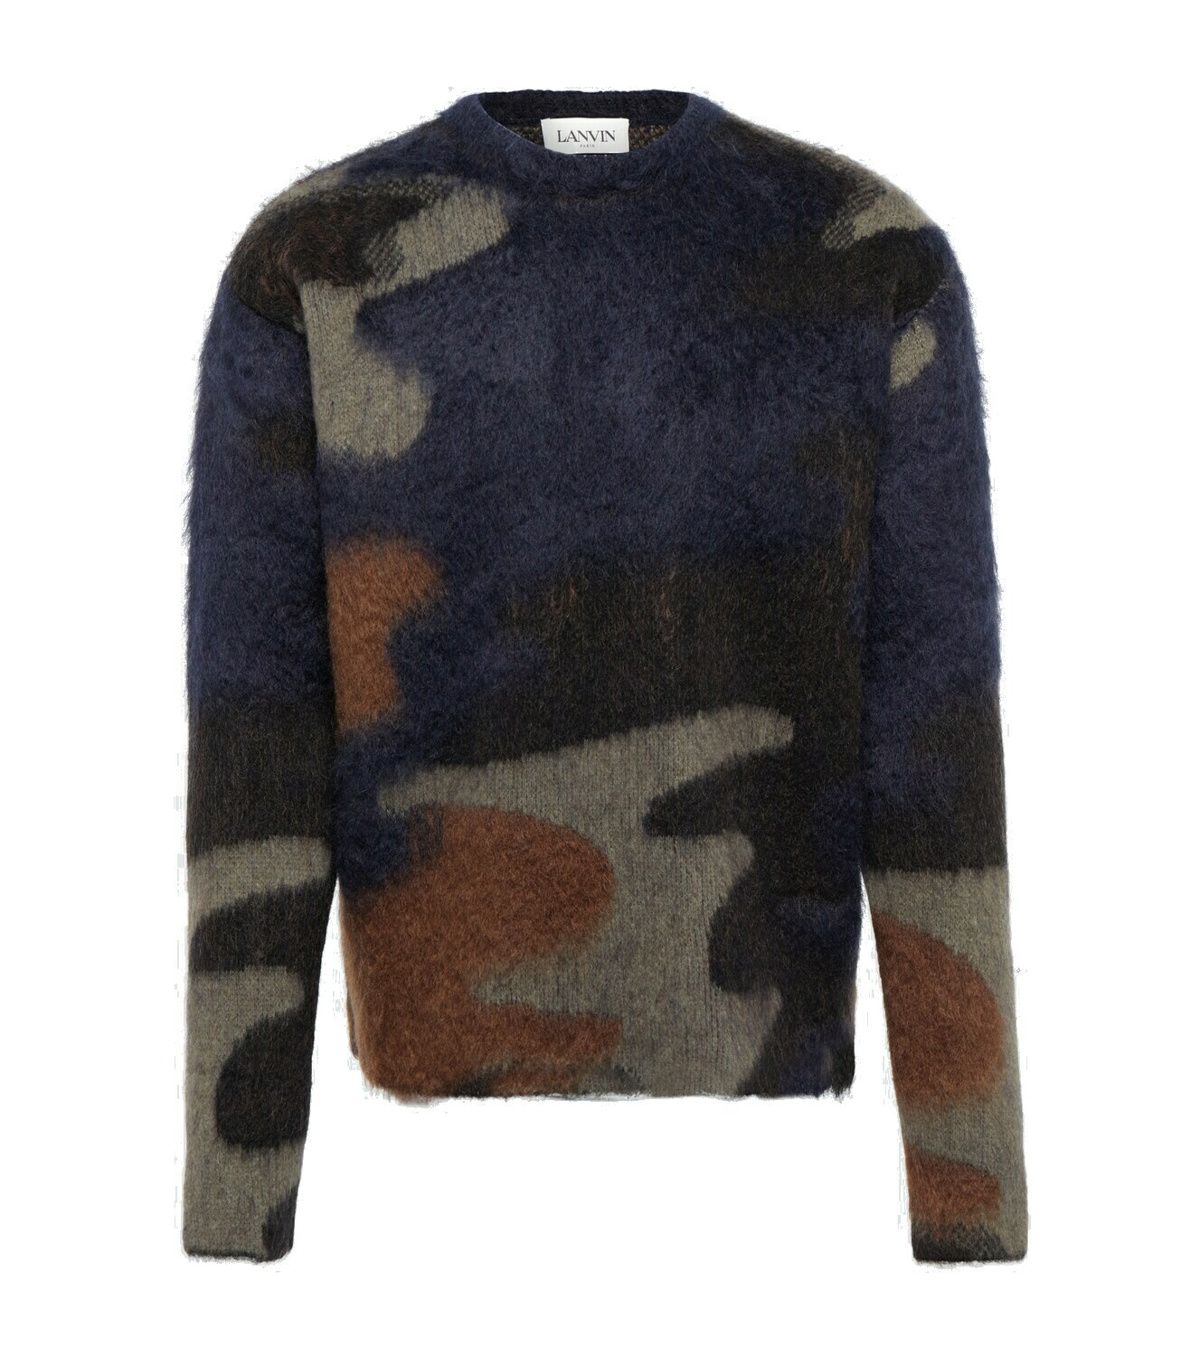 Lanvin - Mohair-blend sweater Lanvin